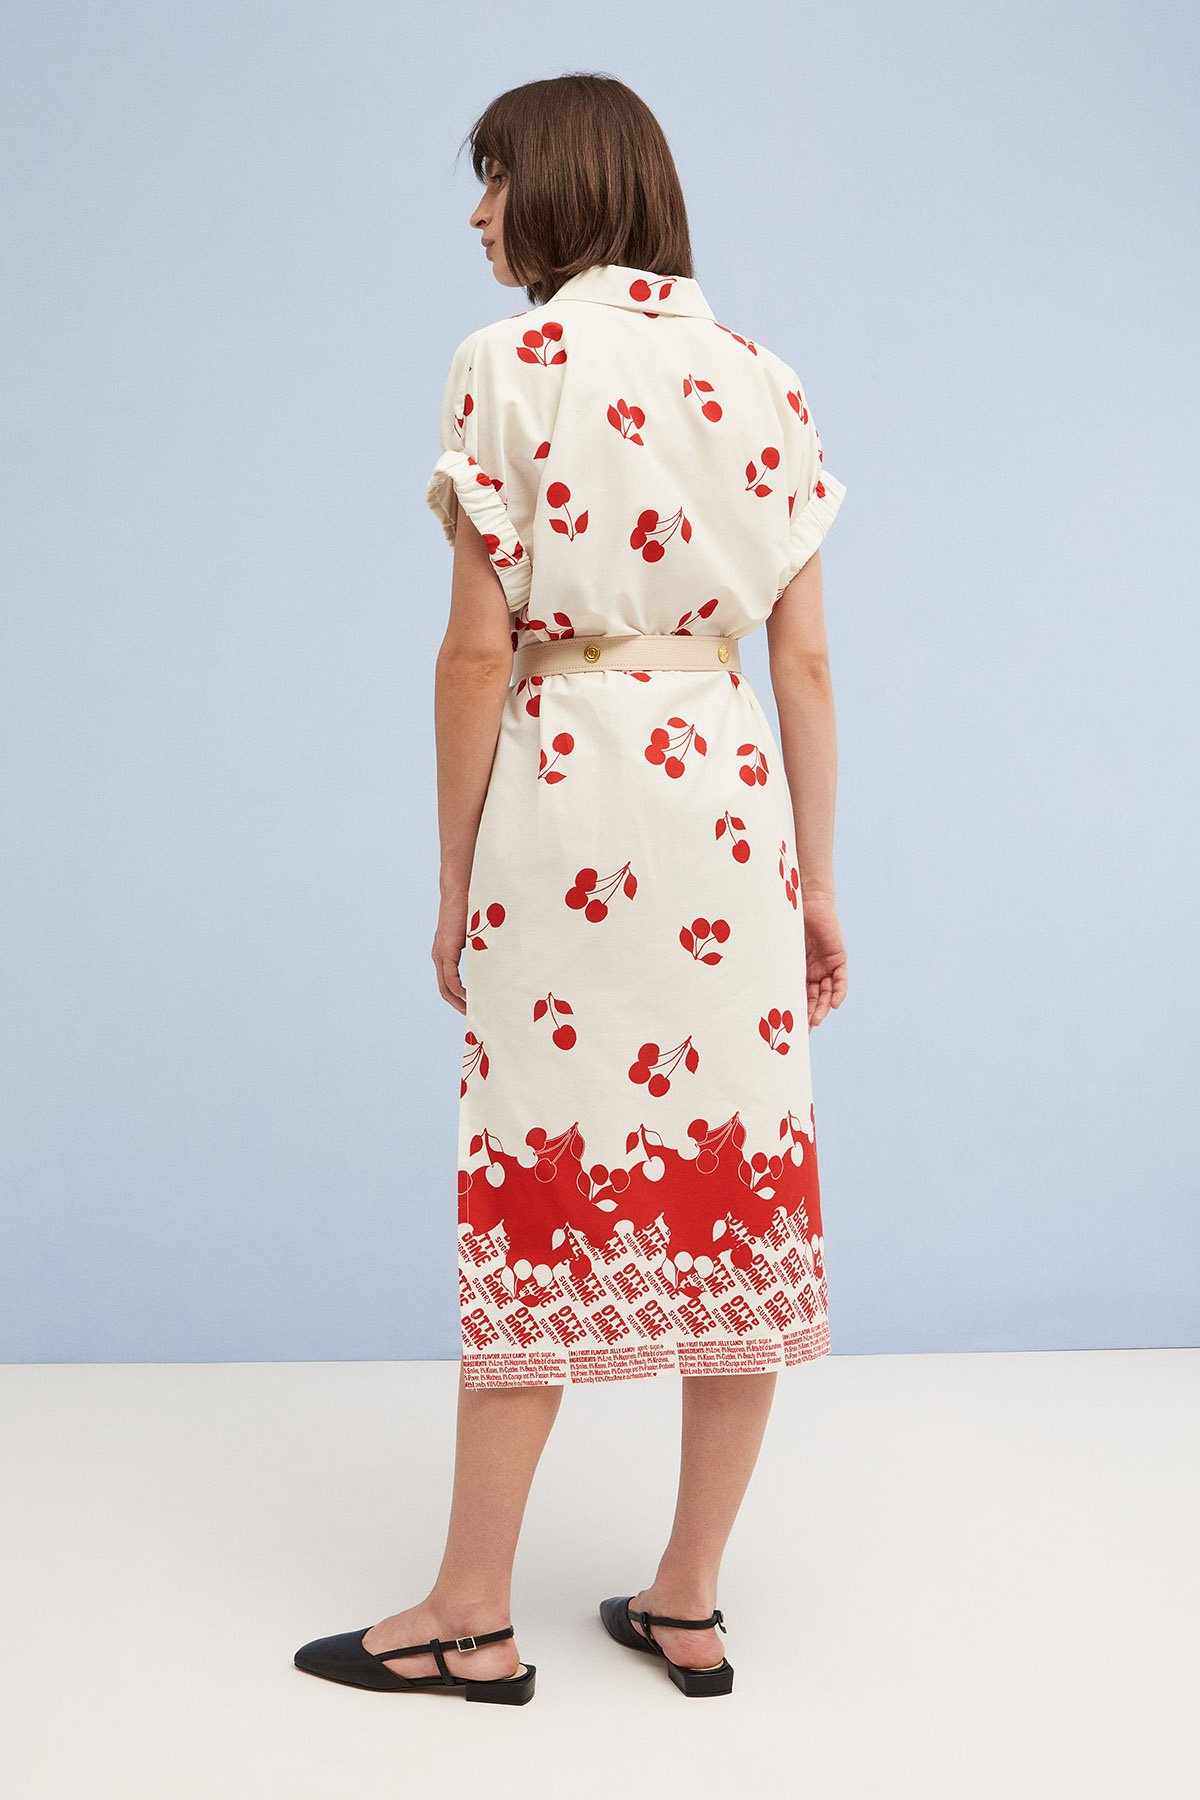 Chemisier dress with cherries printing